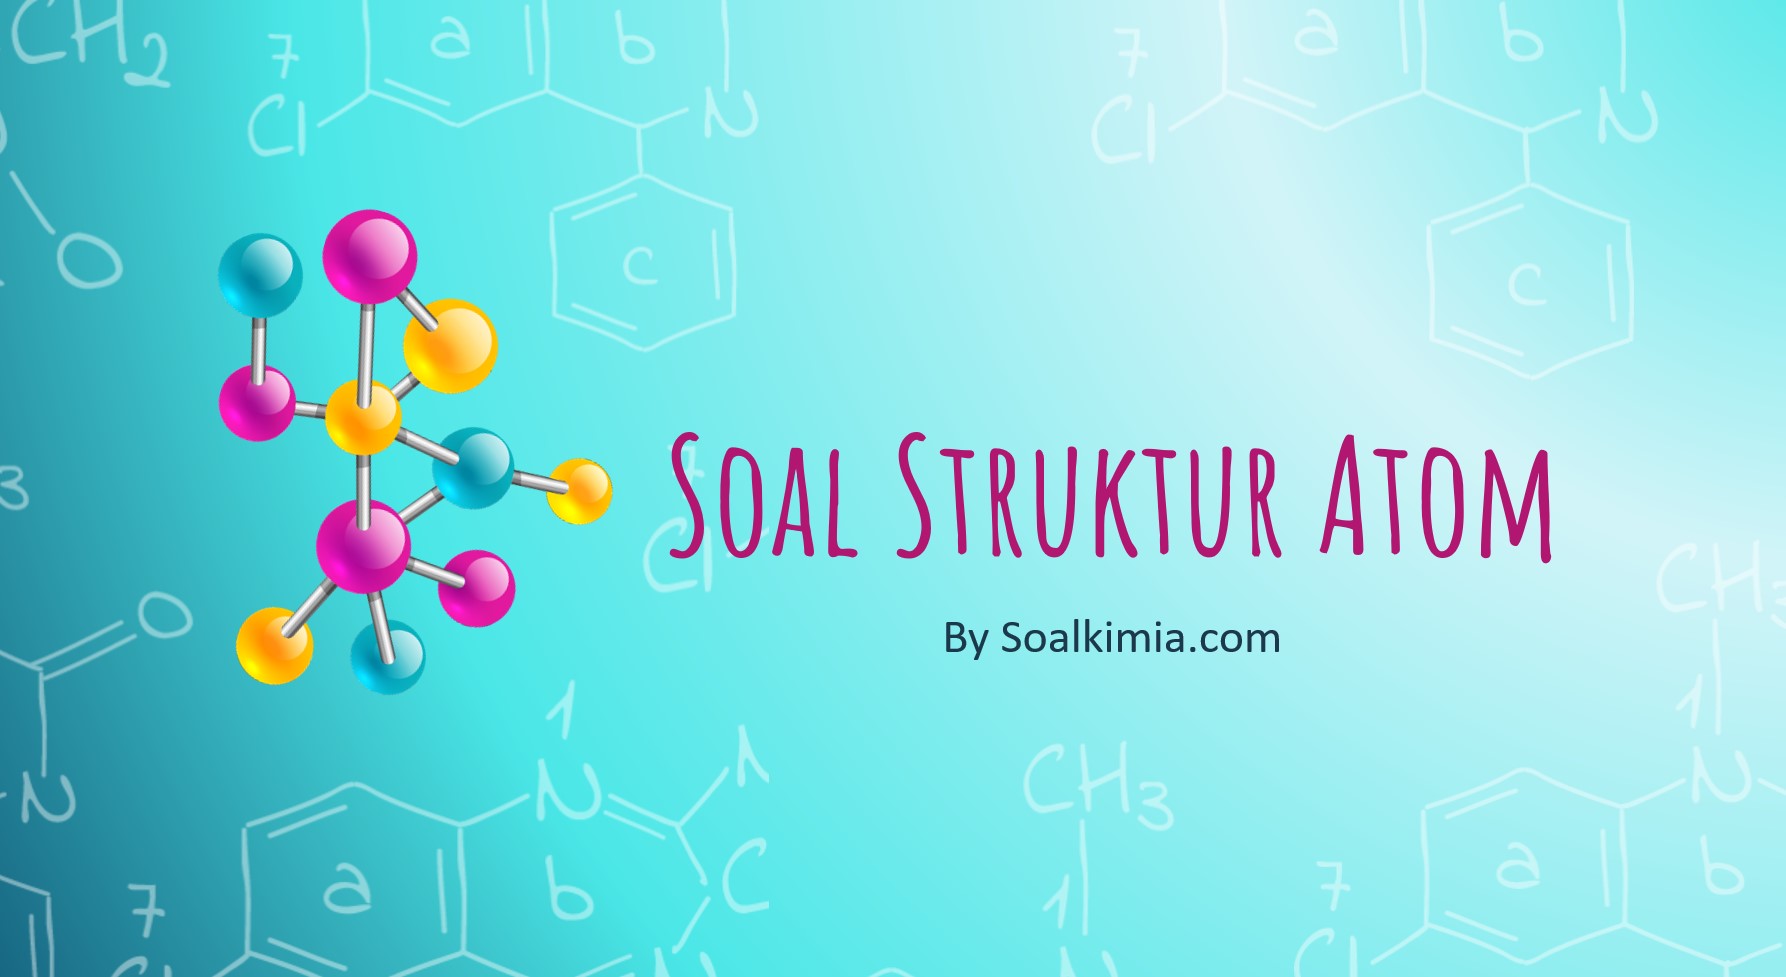 Soal struktur atom